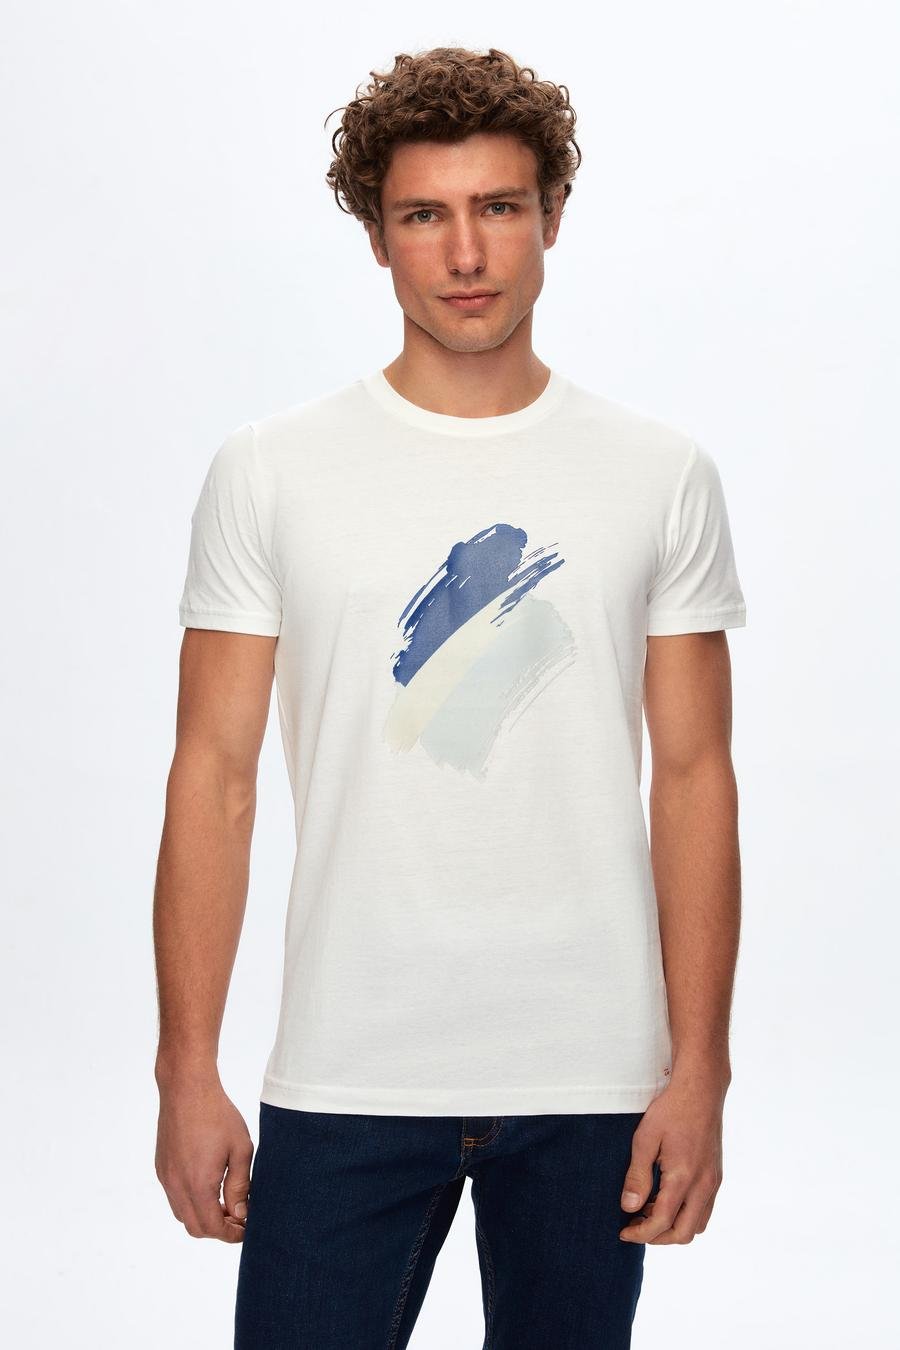 Twn Slim Fit Beyaz Baskılı T-Shirt - 8683218342067 | D'S Damat